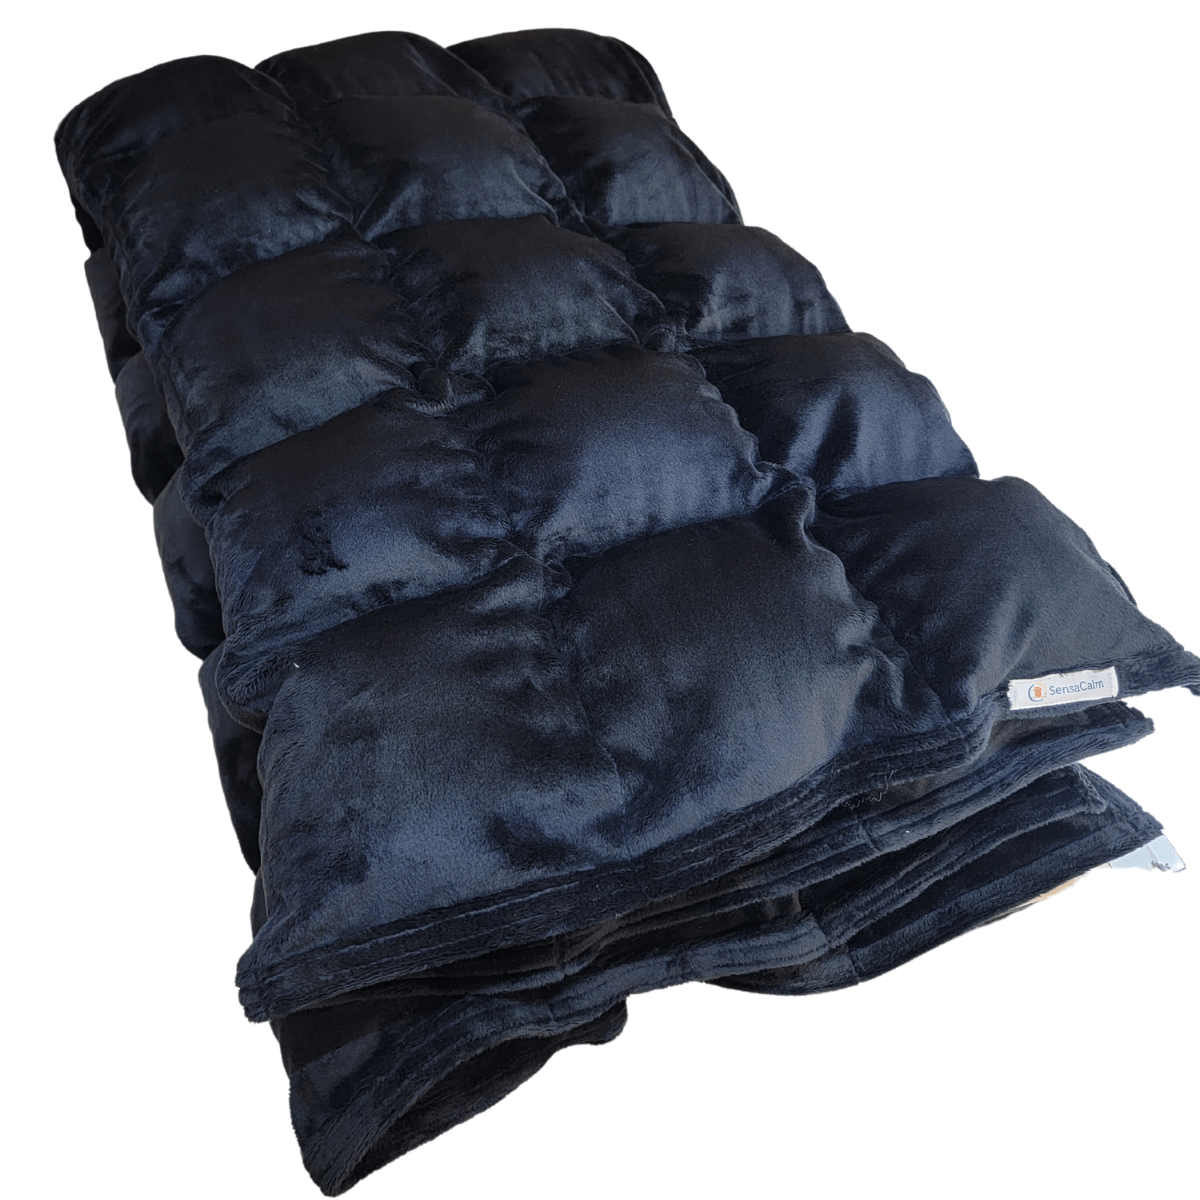 SensaCalm Custom Cuddle Weighted Blanket - Black Cuddle Custom Weighted Blanket